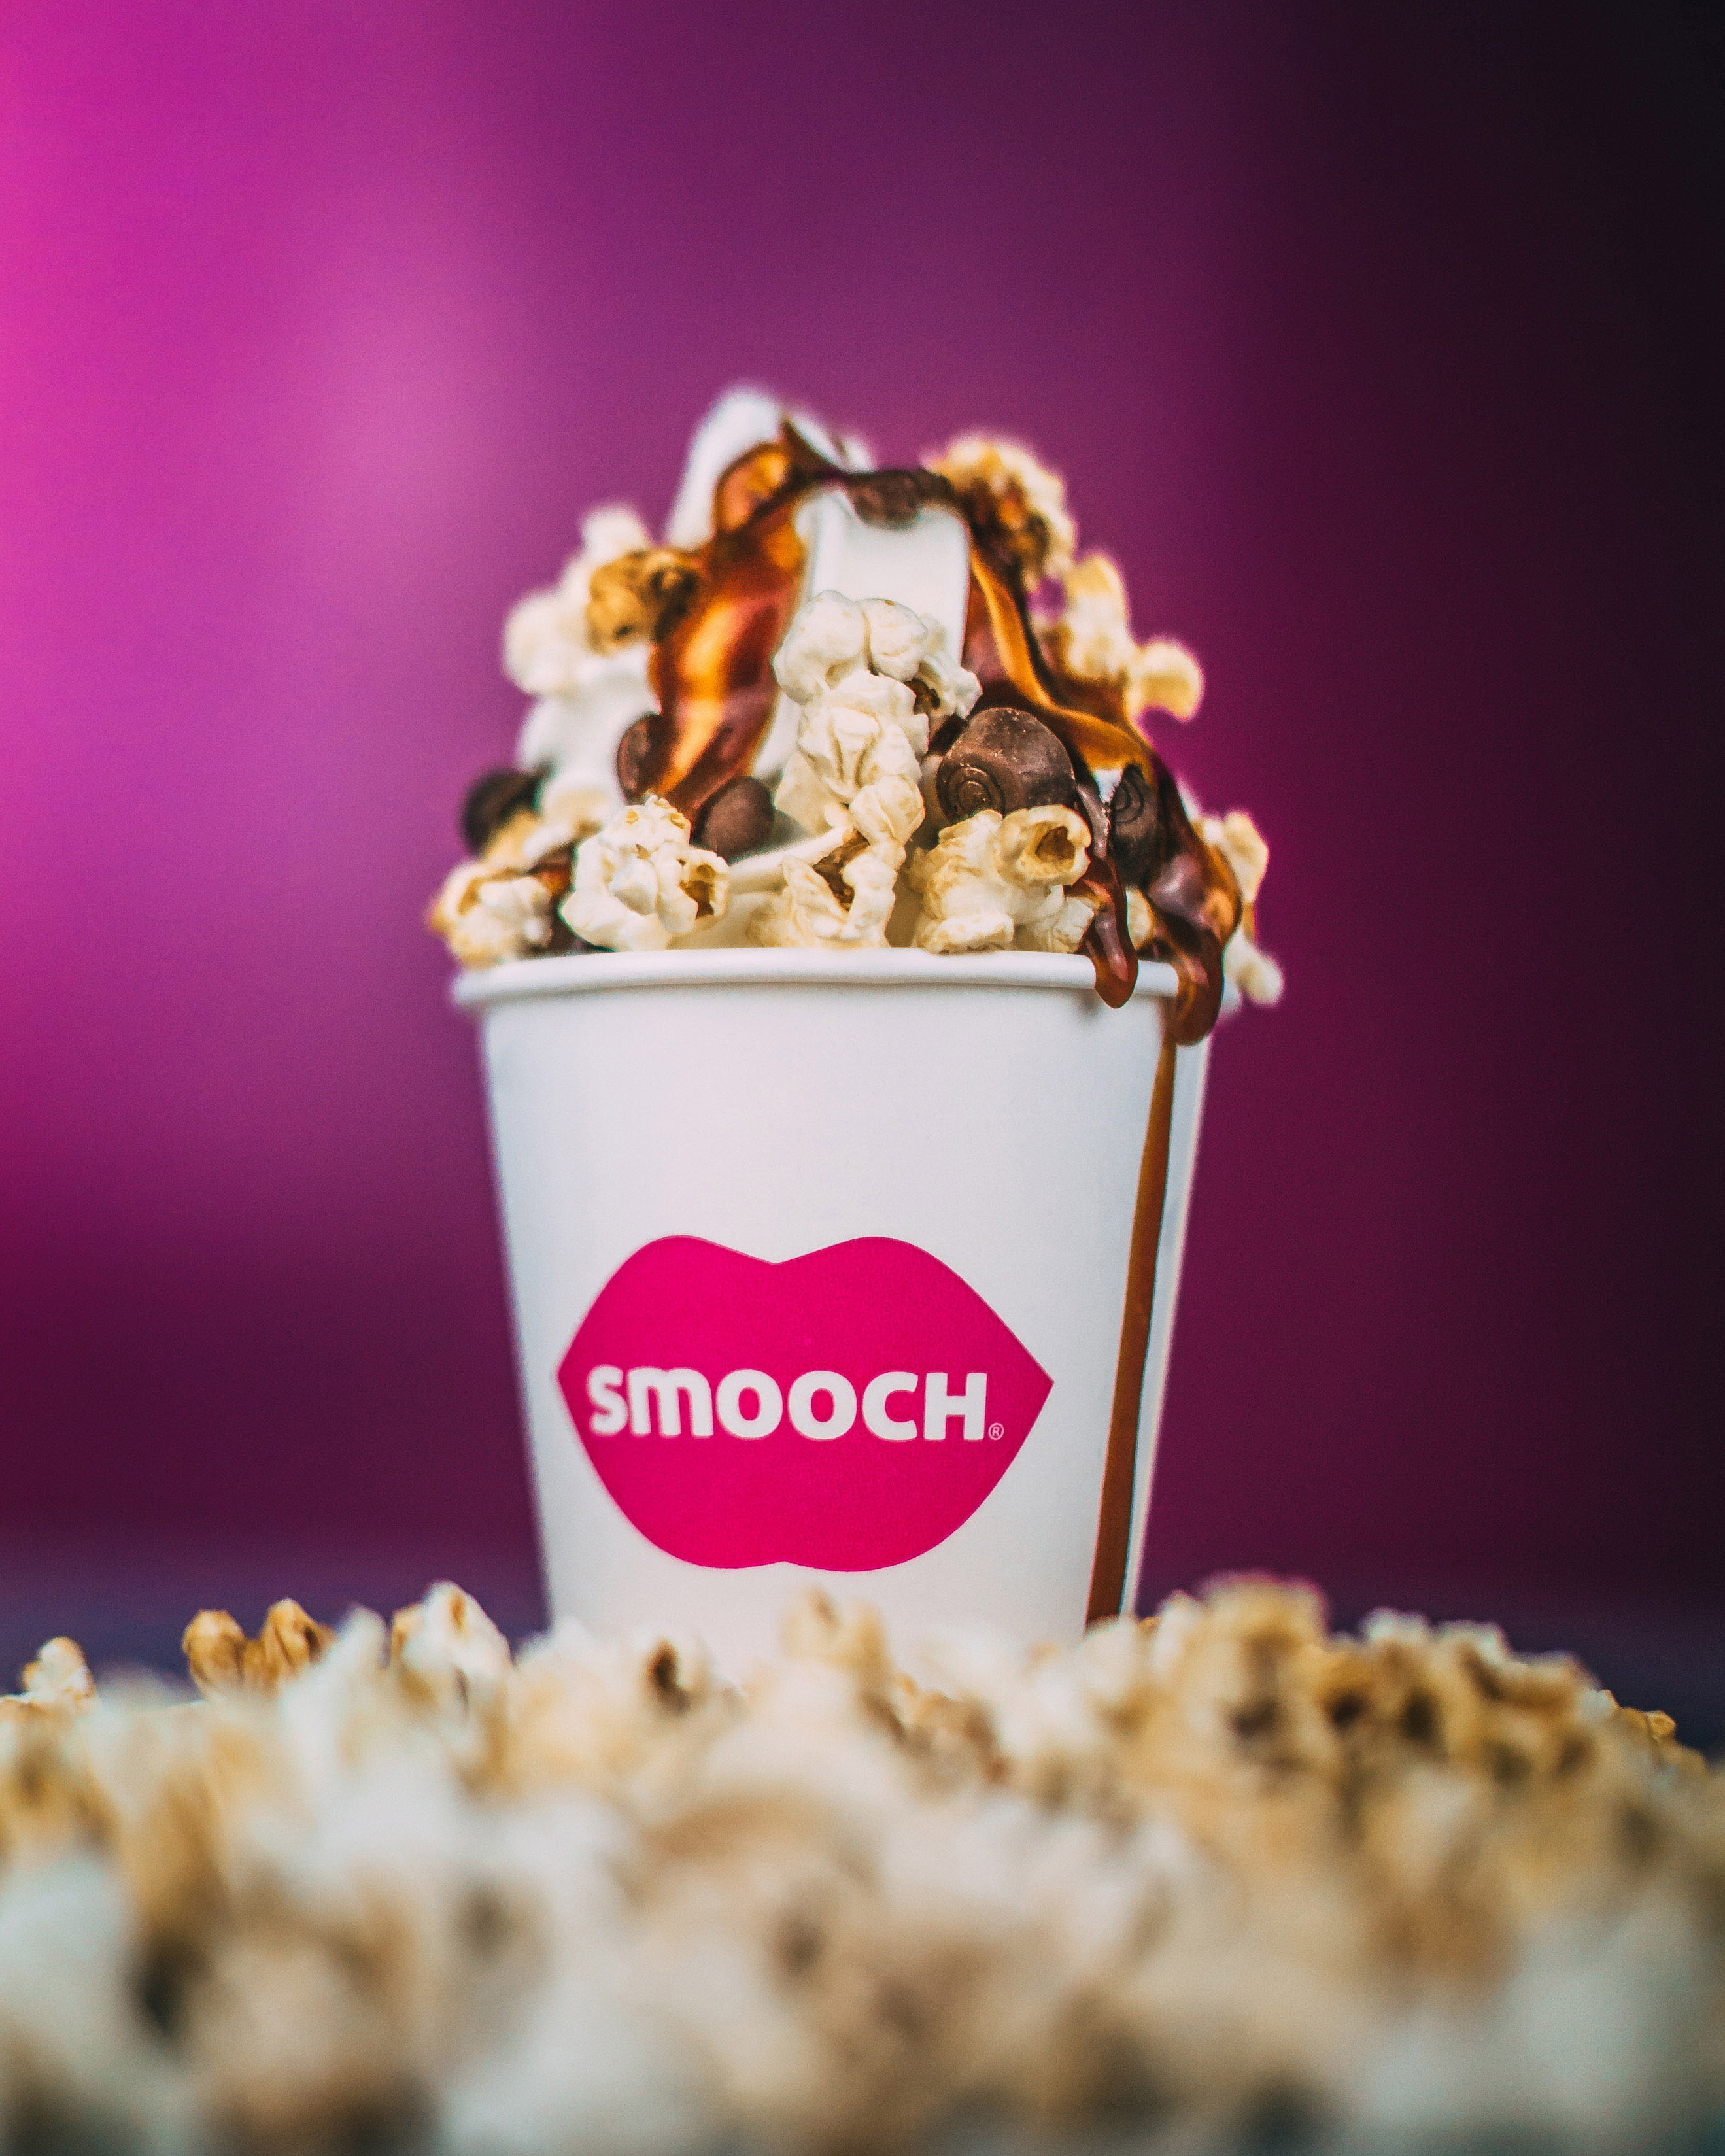 Irish Ice Cream Smooch Launches New Summer Flavour – Propercorn Salted Caramel Smooch